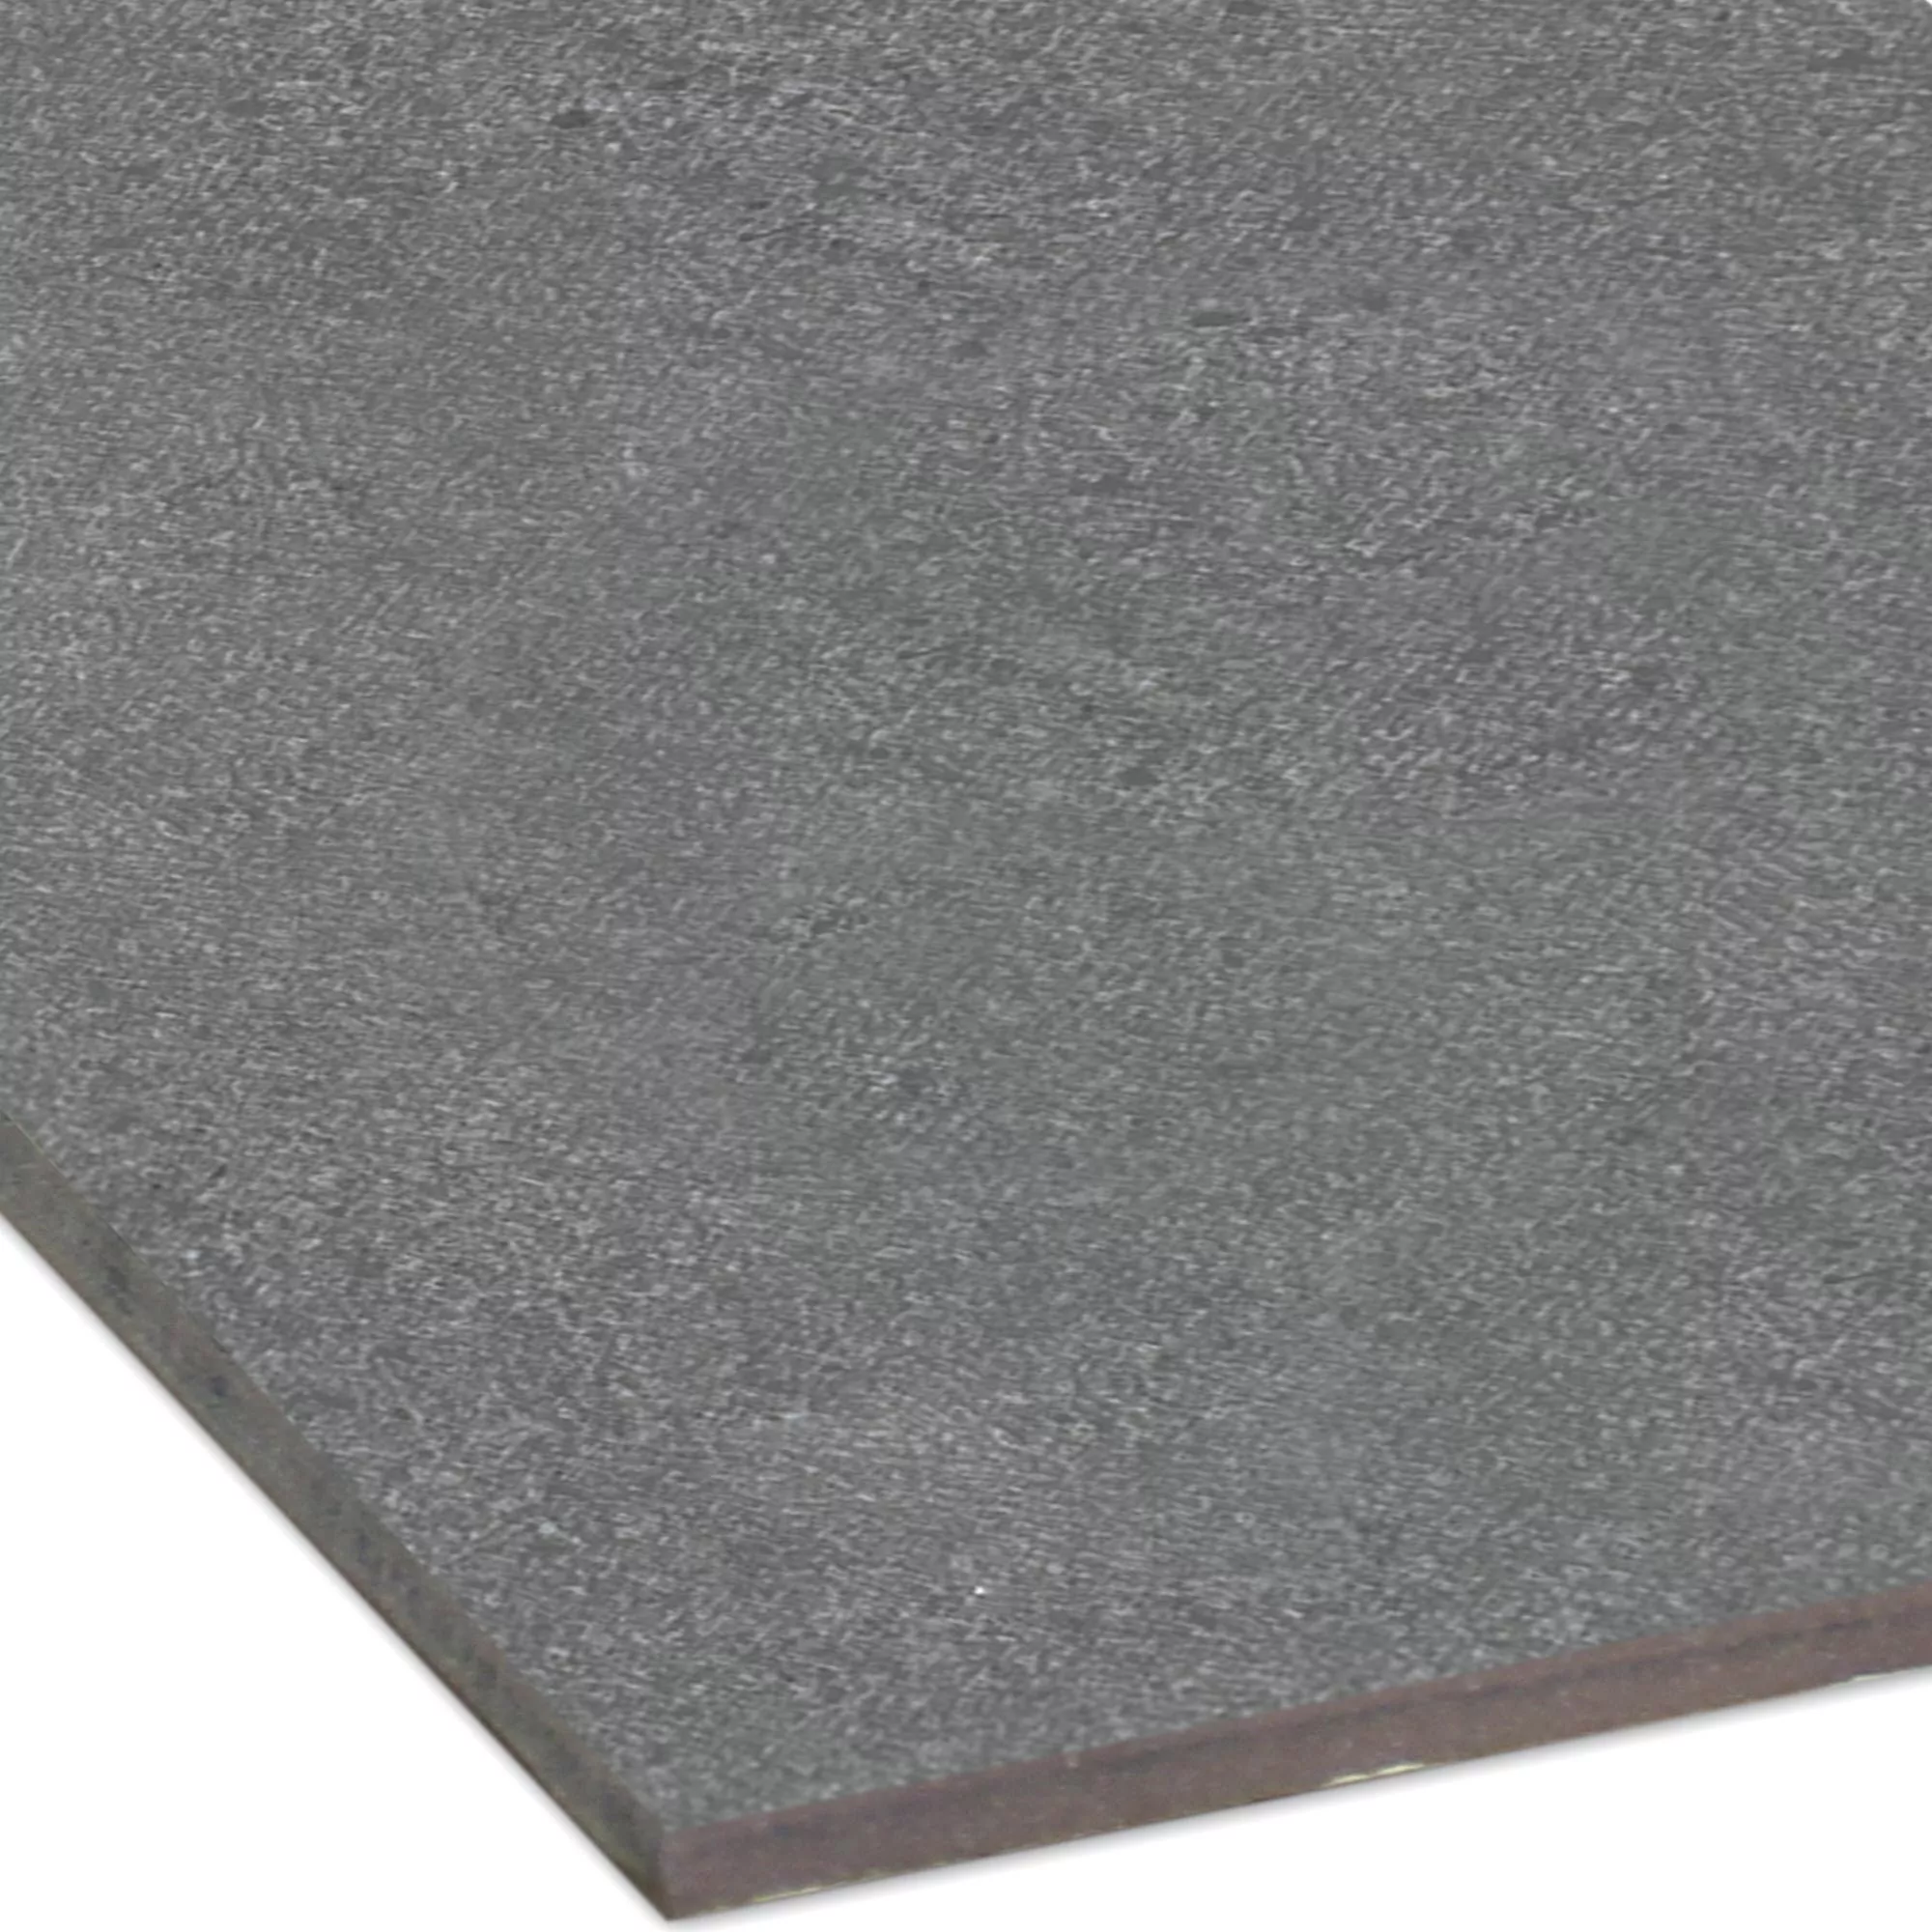 Sample Floor Tiles Galilea Unglazed R10B Anthracite 30x30cm